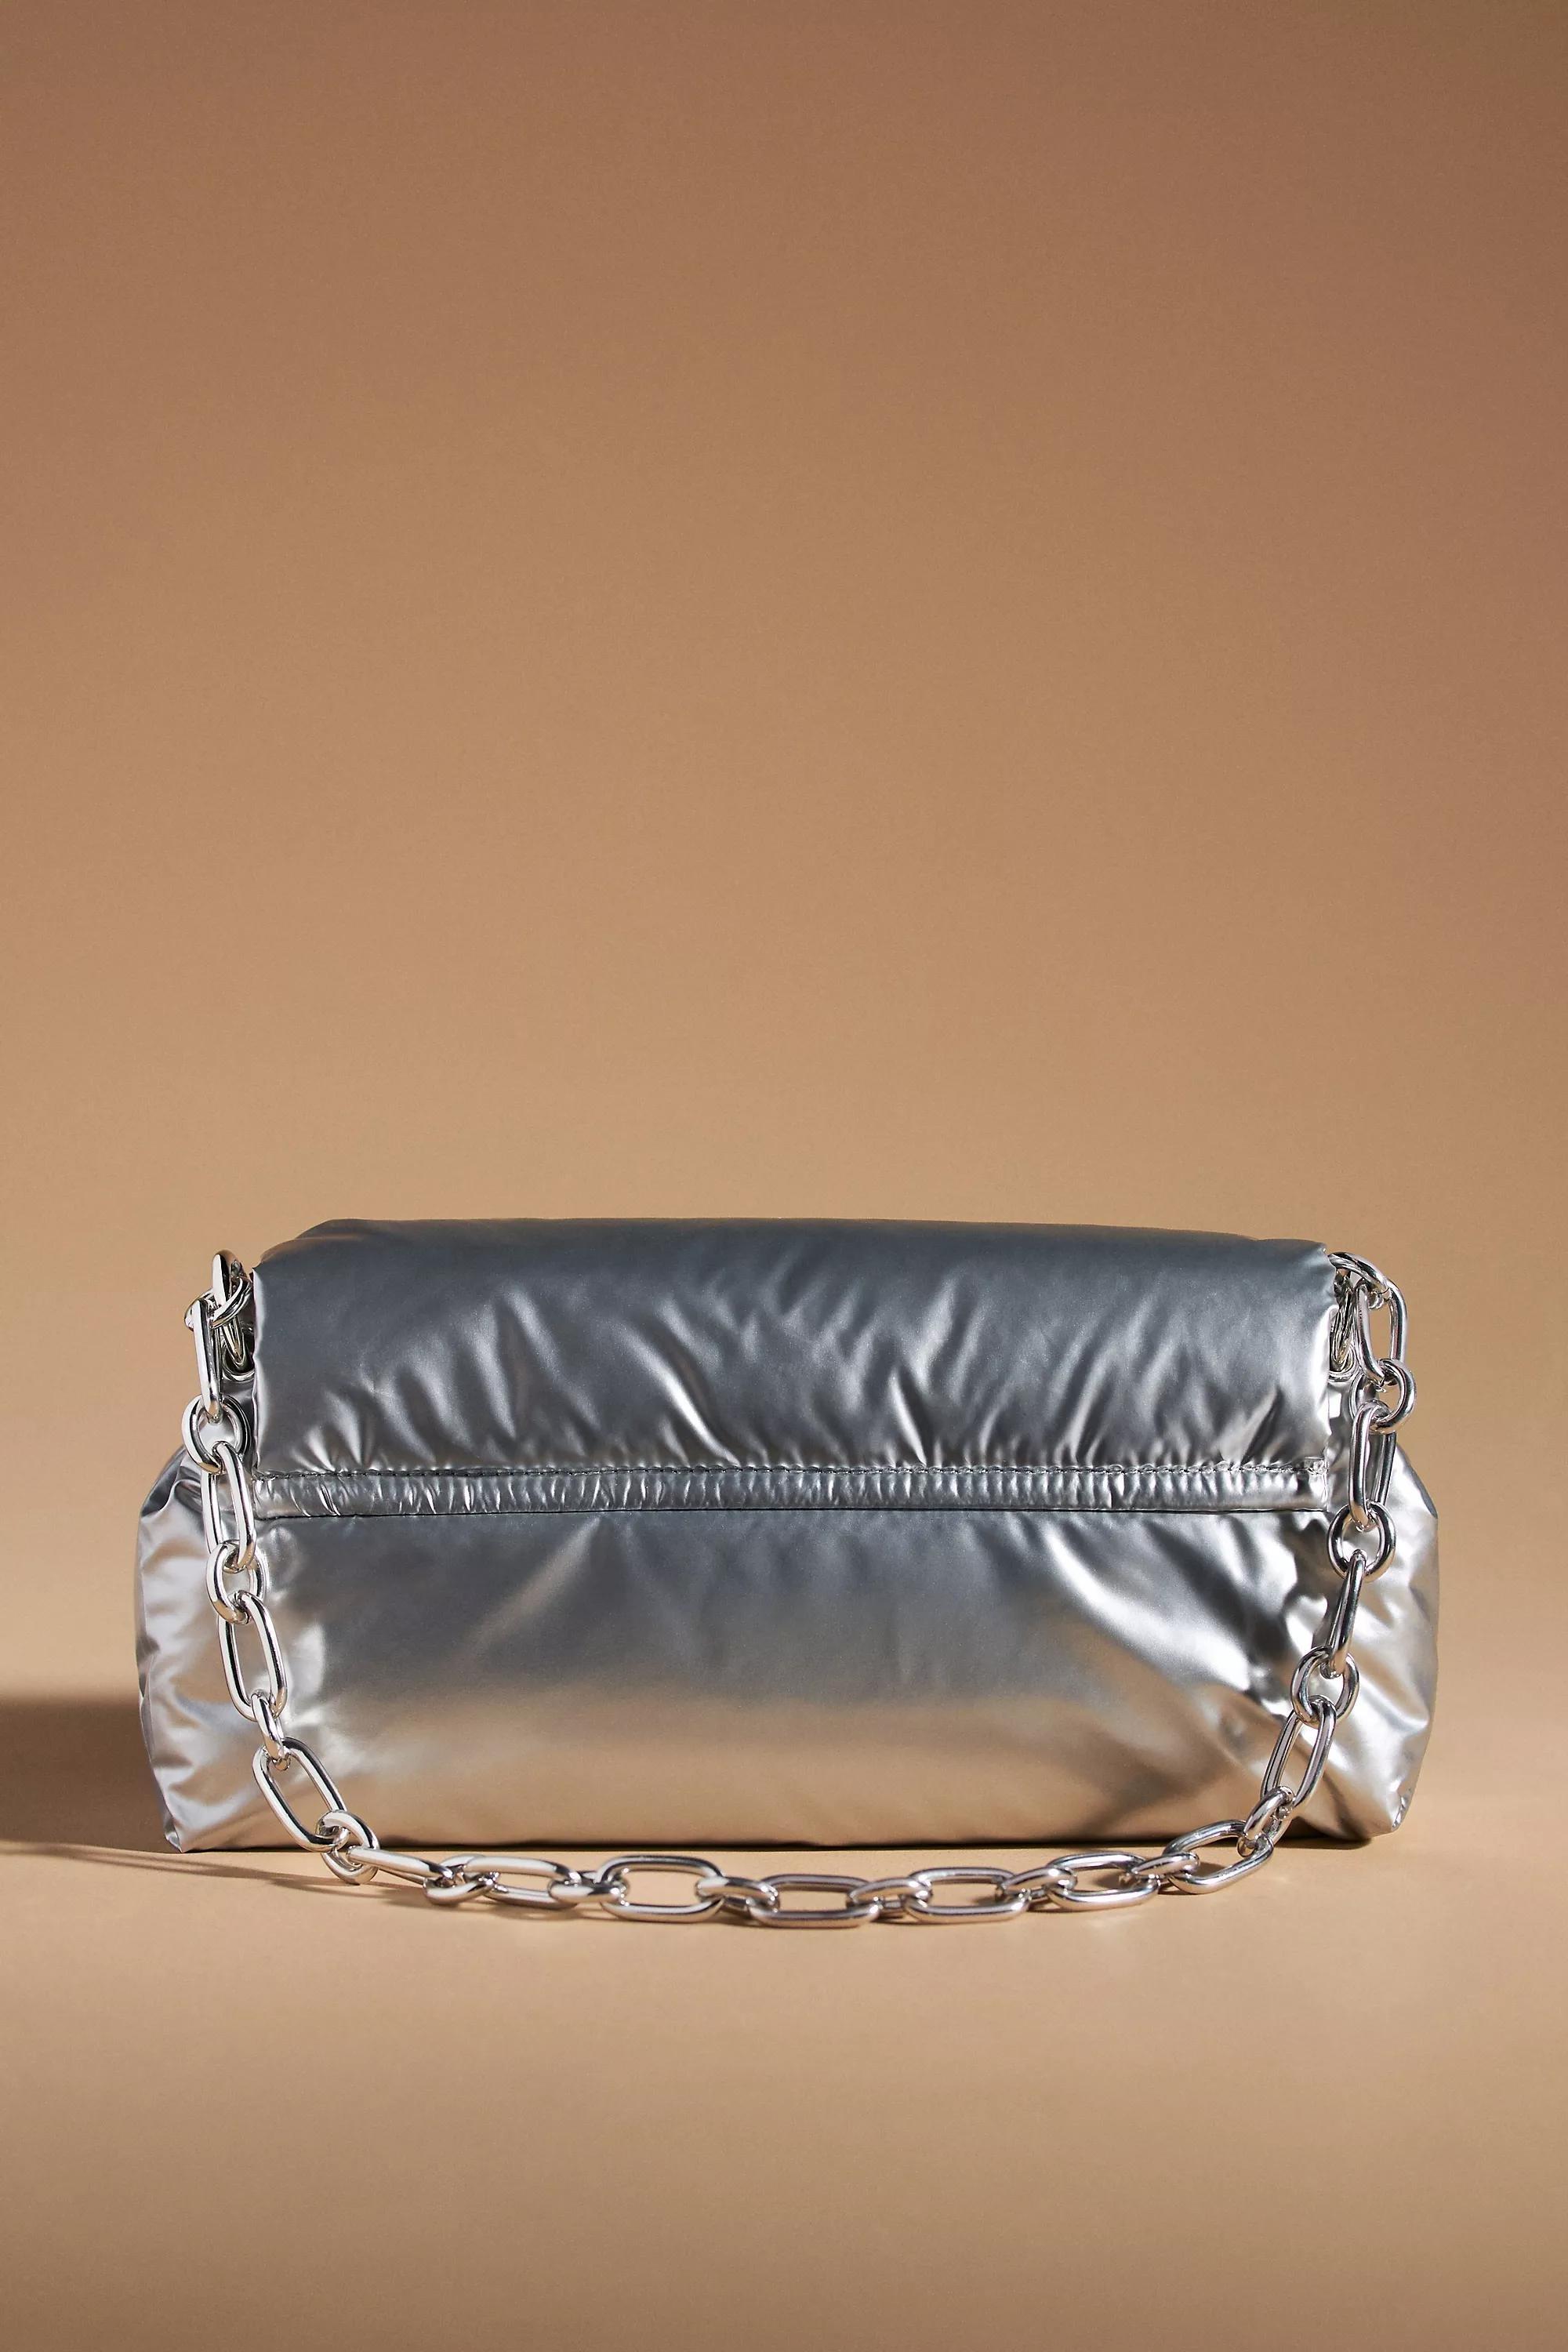 Anthropologie - Metallic Puff Shoulder Bag, Silver